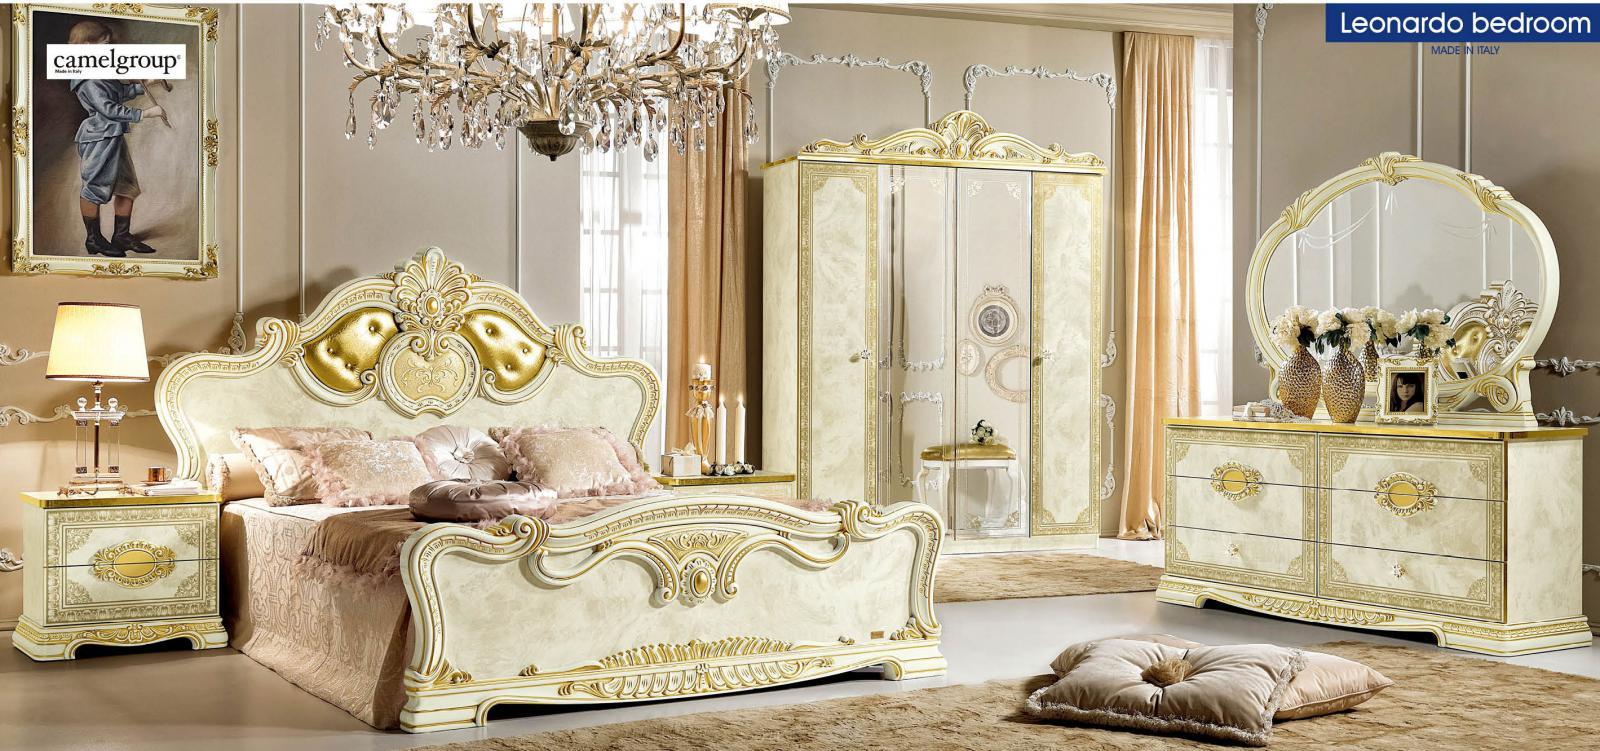 Classic Panel Bedroom Set Leonardo ESF-Leonardo-Q-1NDM-4PC in Ivory, Gold Faux Leather